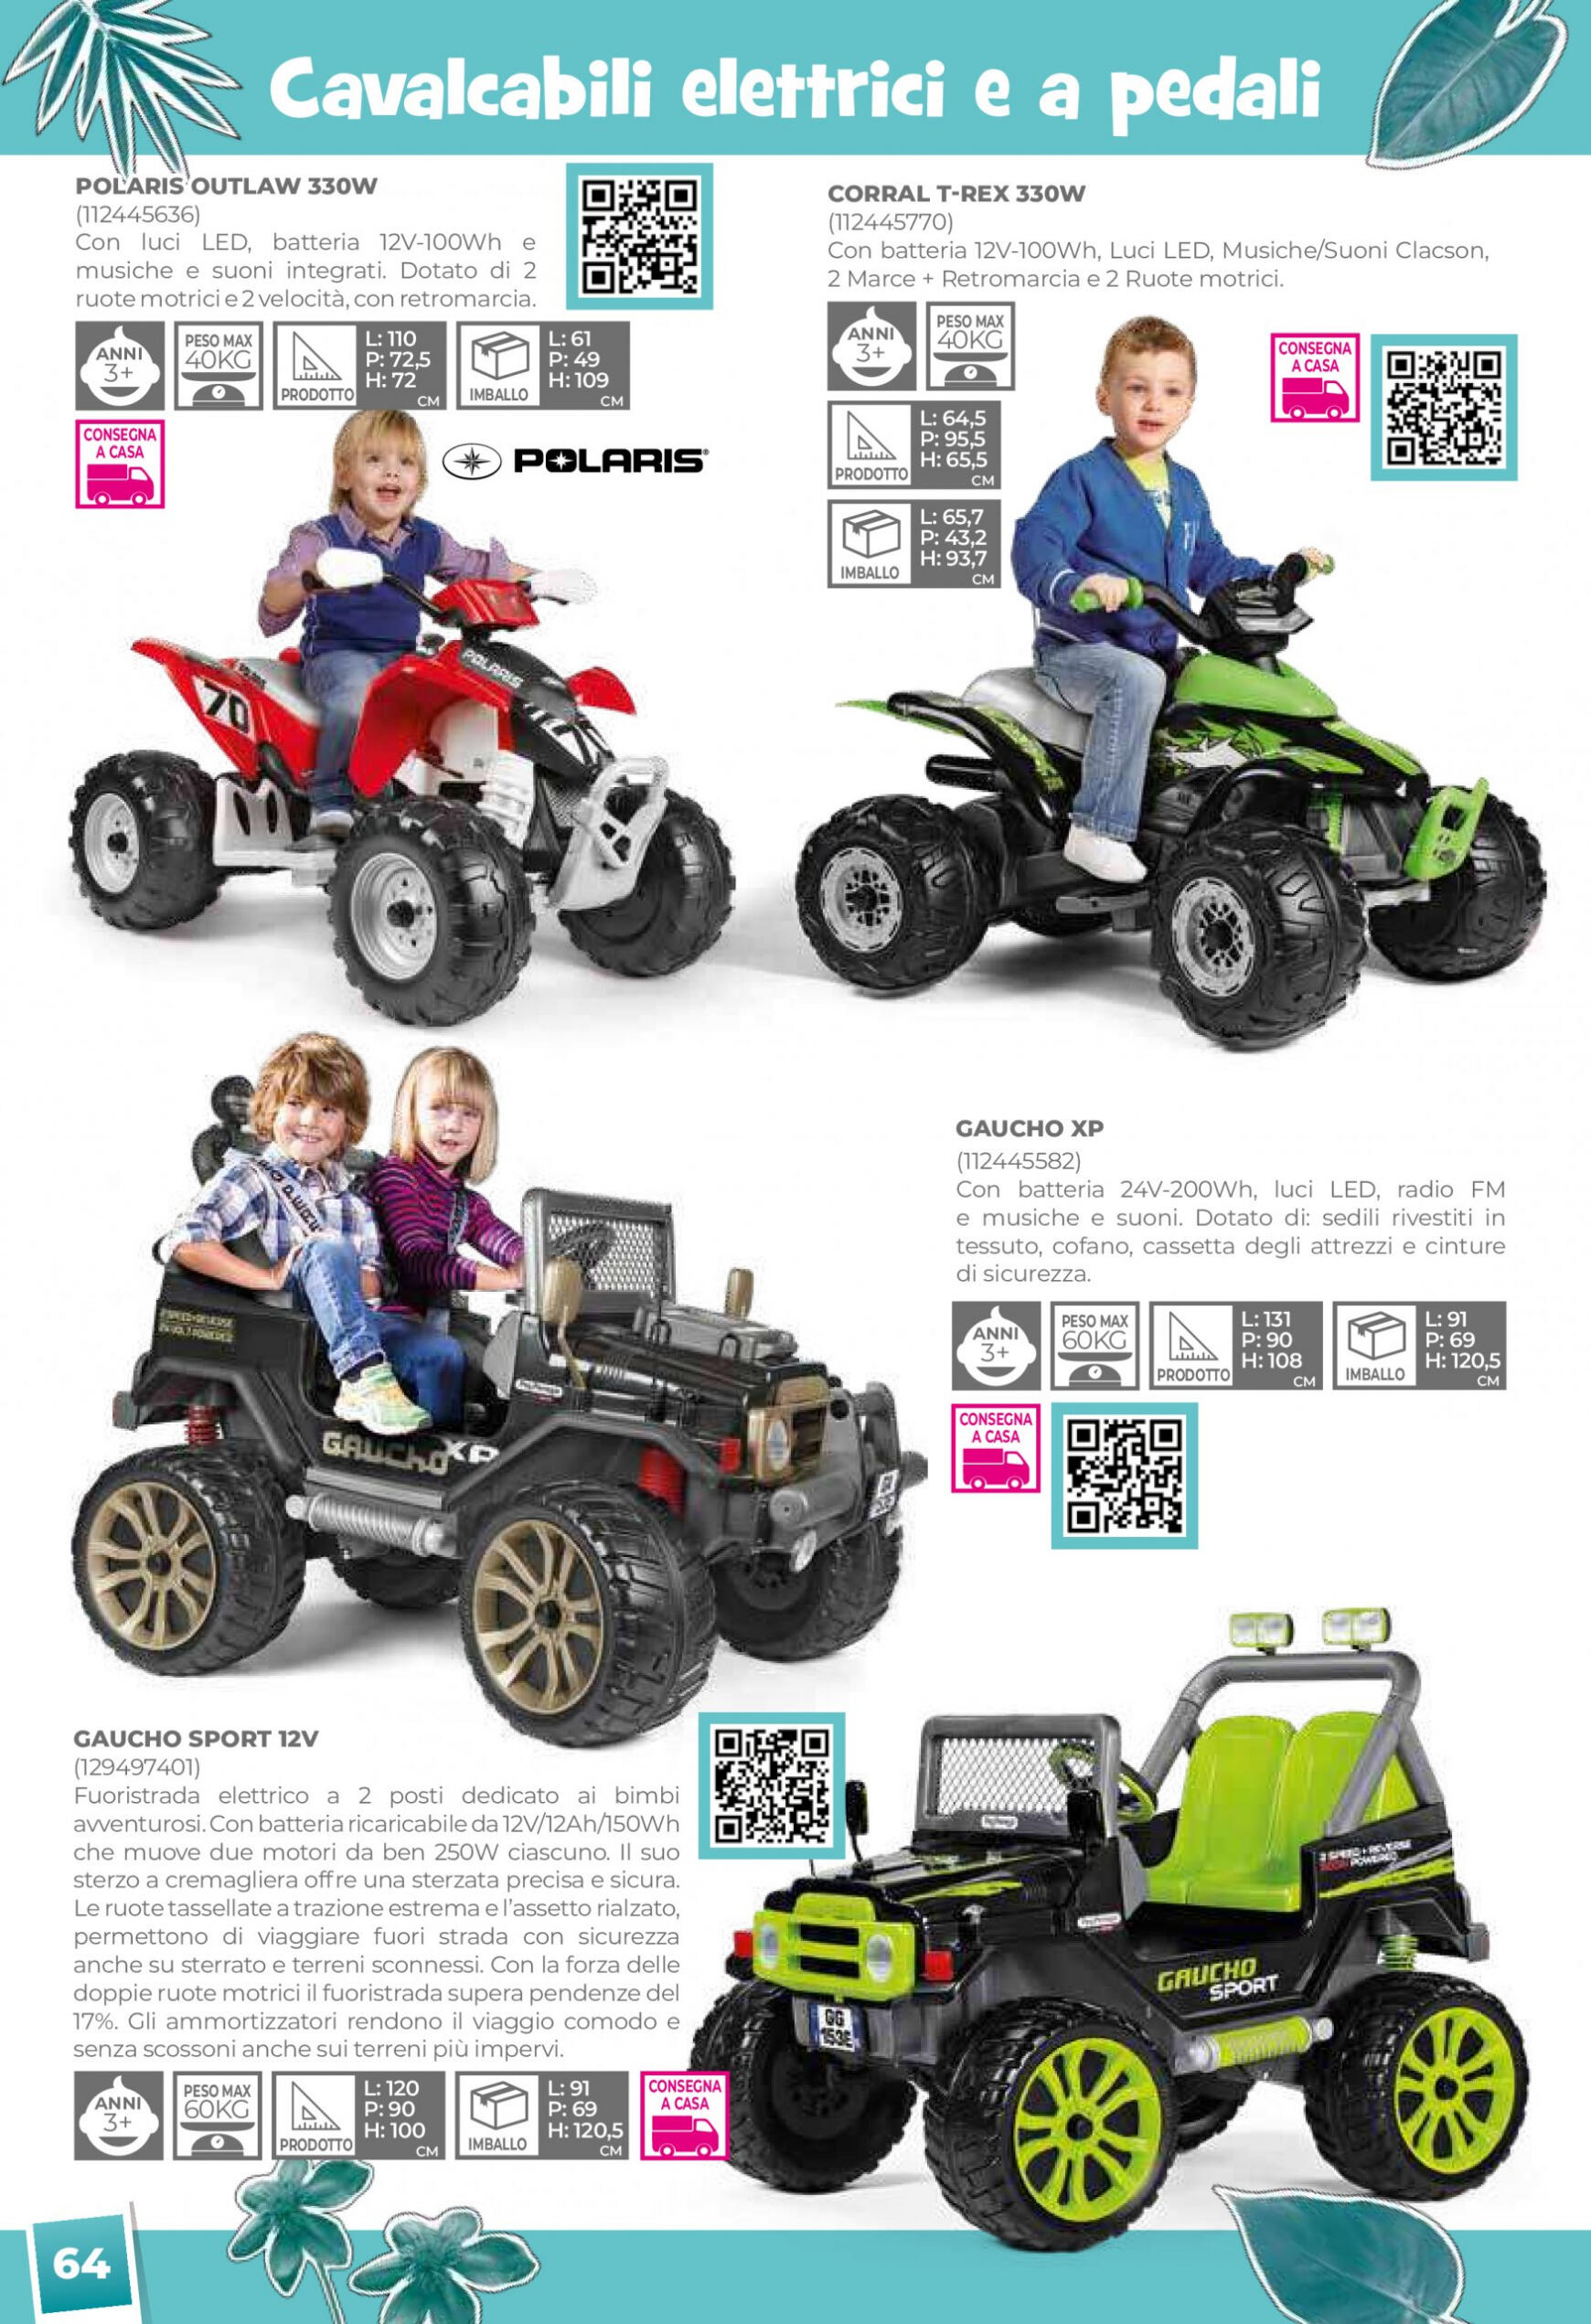 toys-center - Nuovo volantino Toys Center 01.05. - 31.12. - page: 66